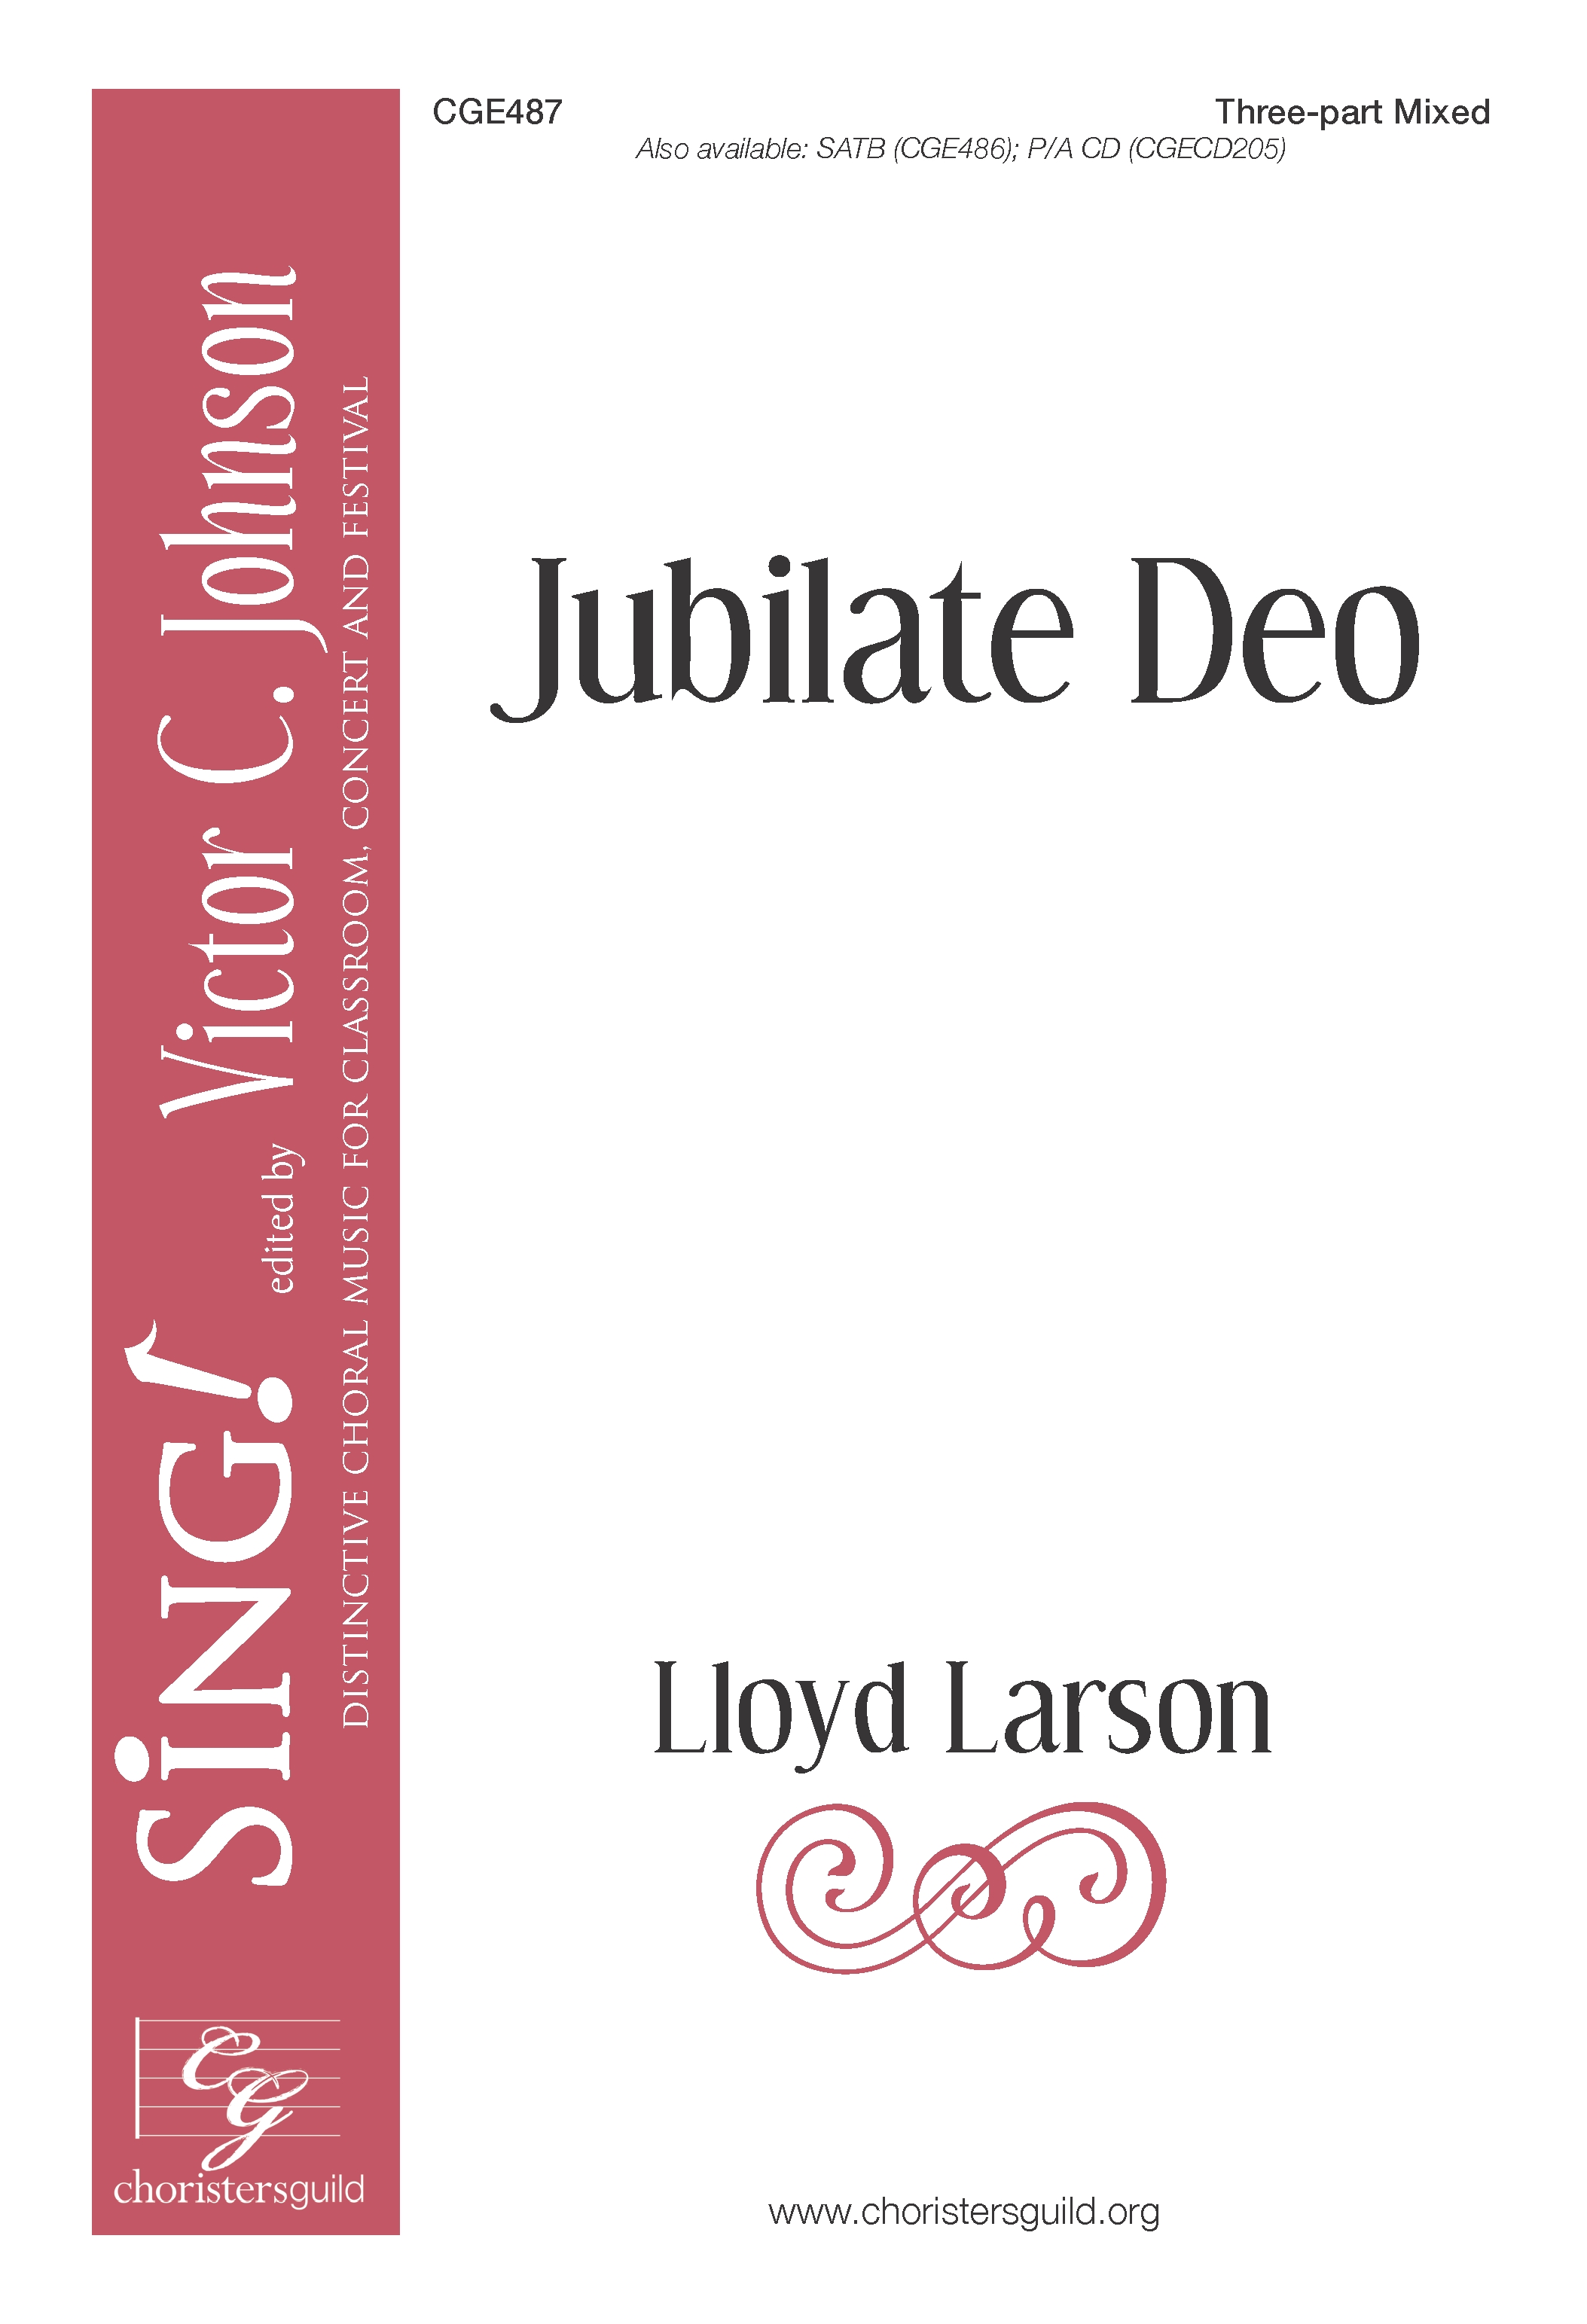 Jubilate Deo - Three-part Mixed